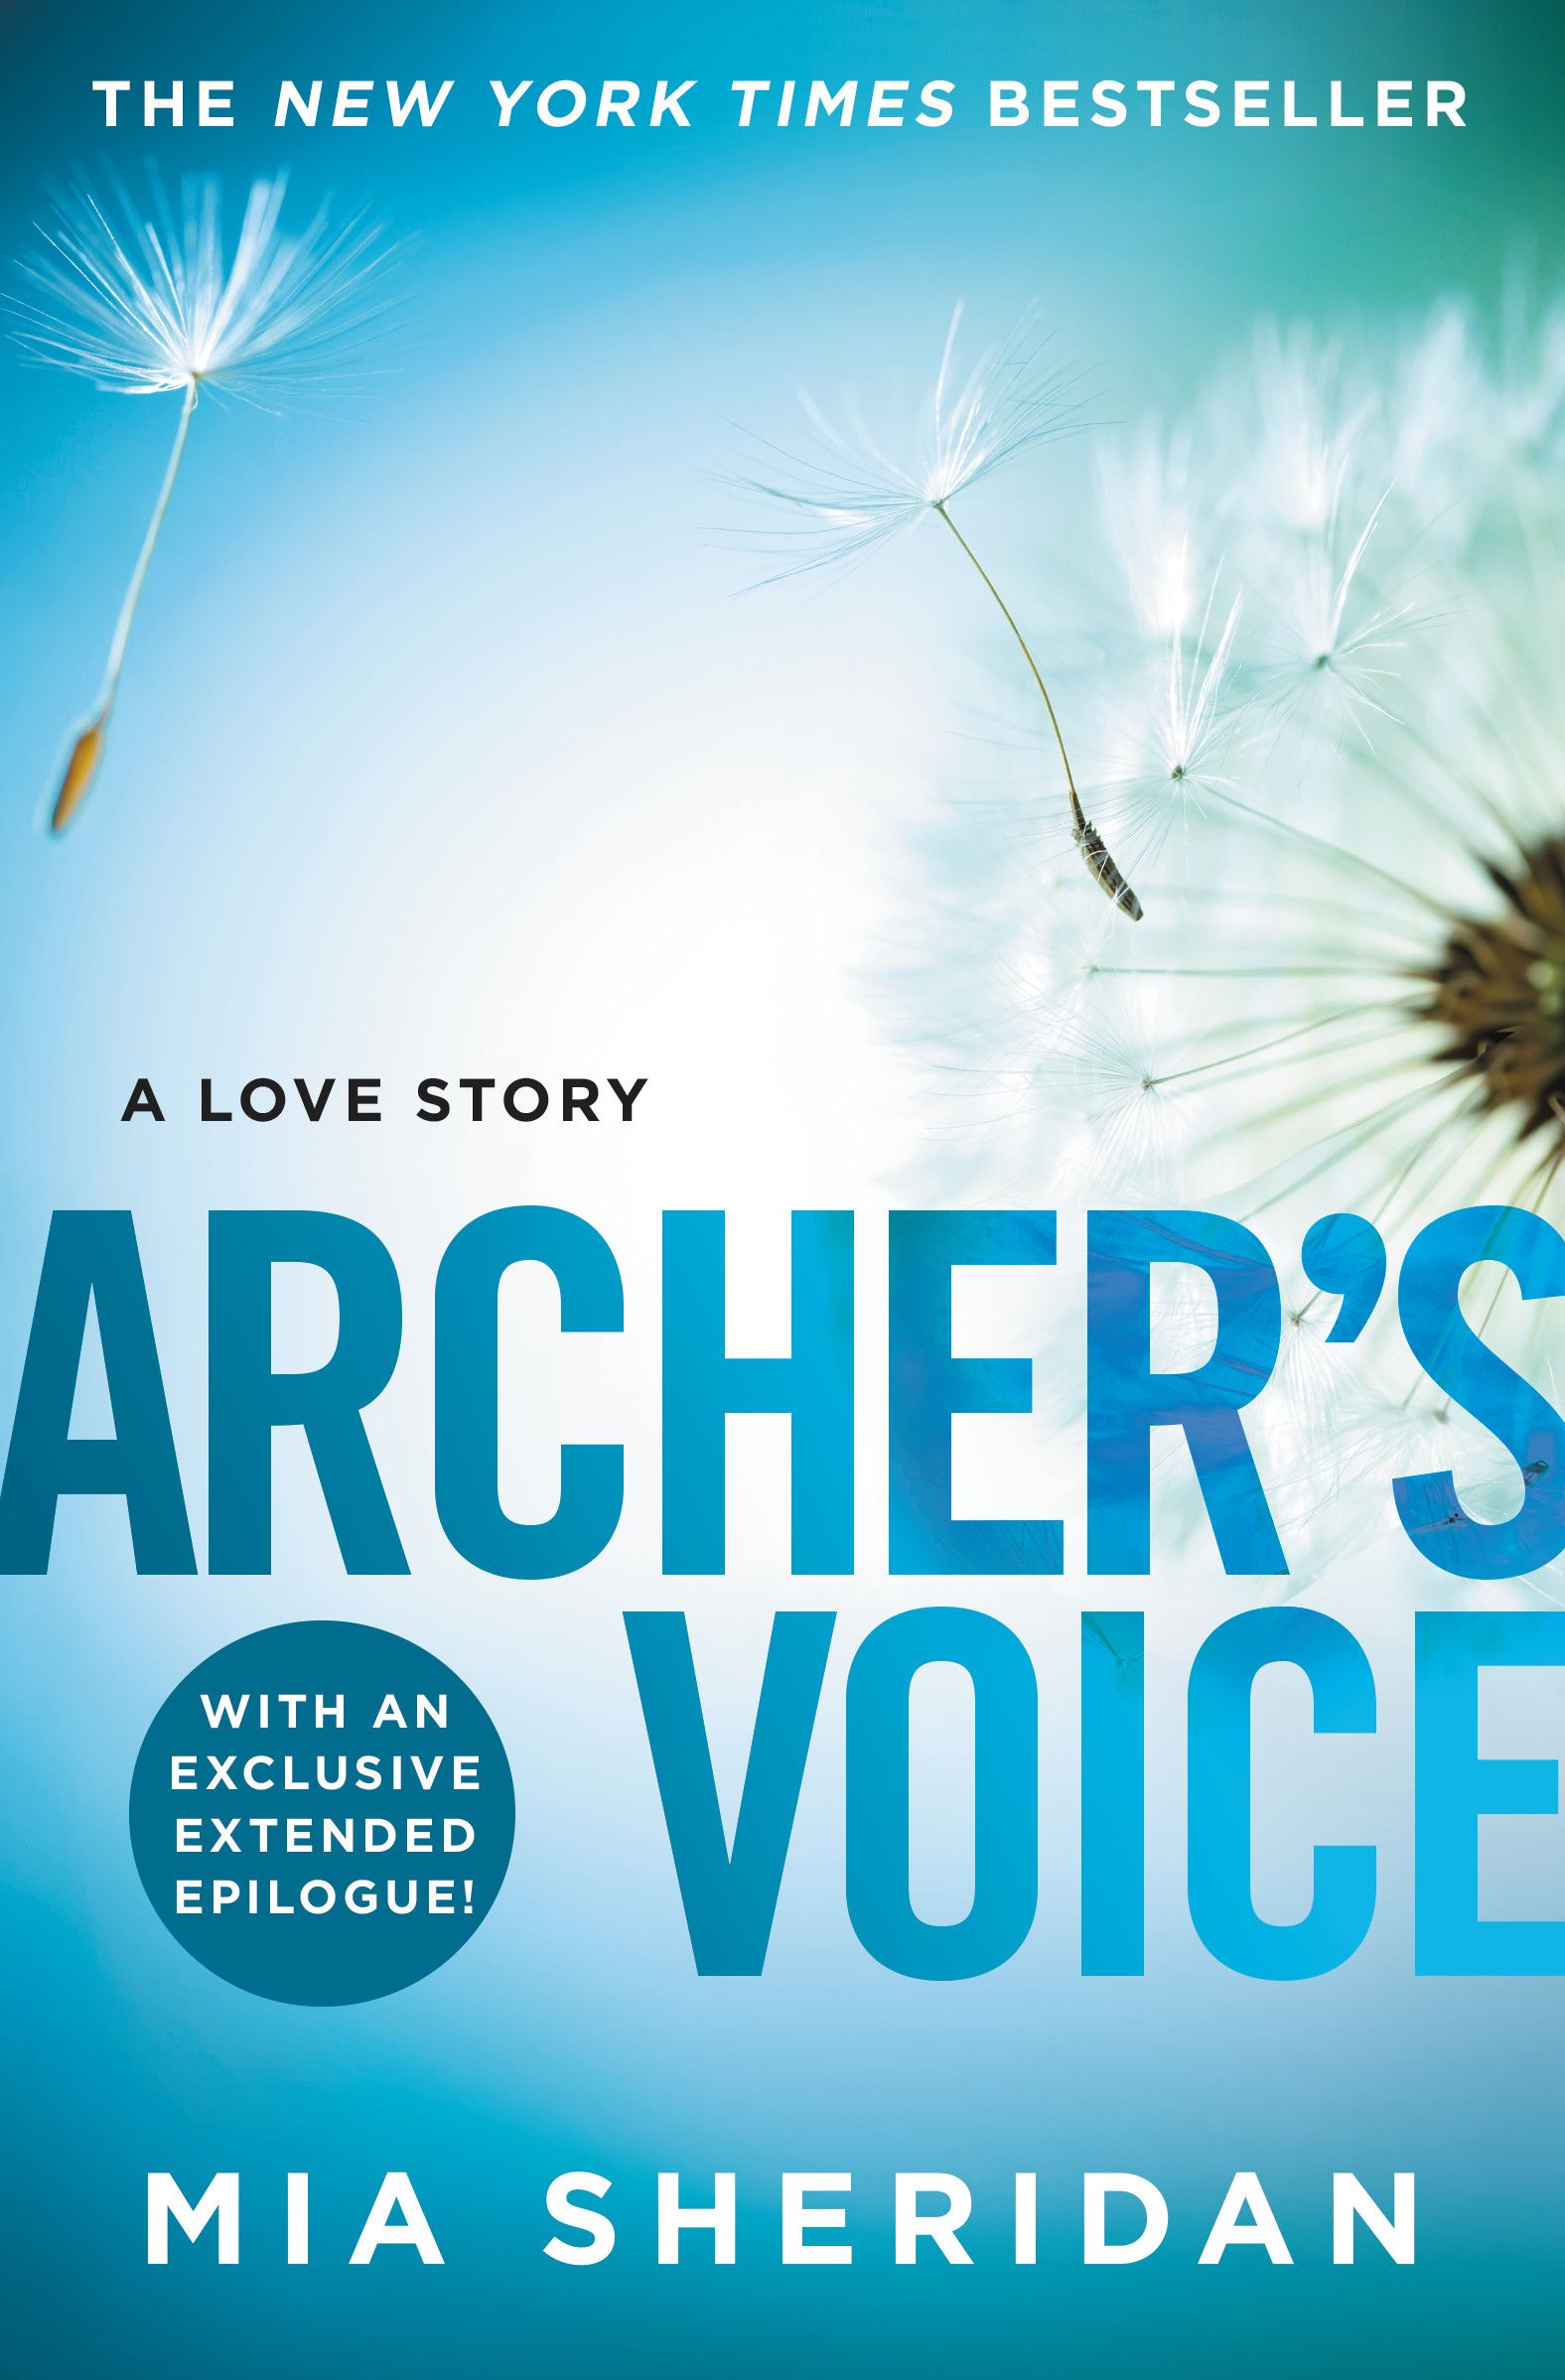 Download Archer's Voice PDF by Mia Sheridan